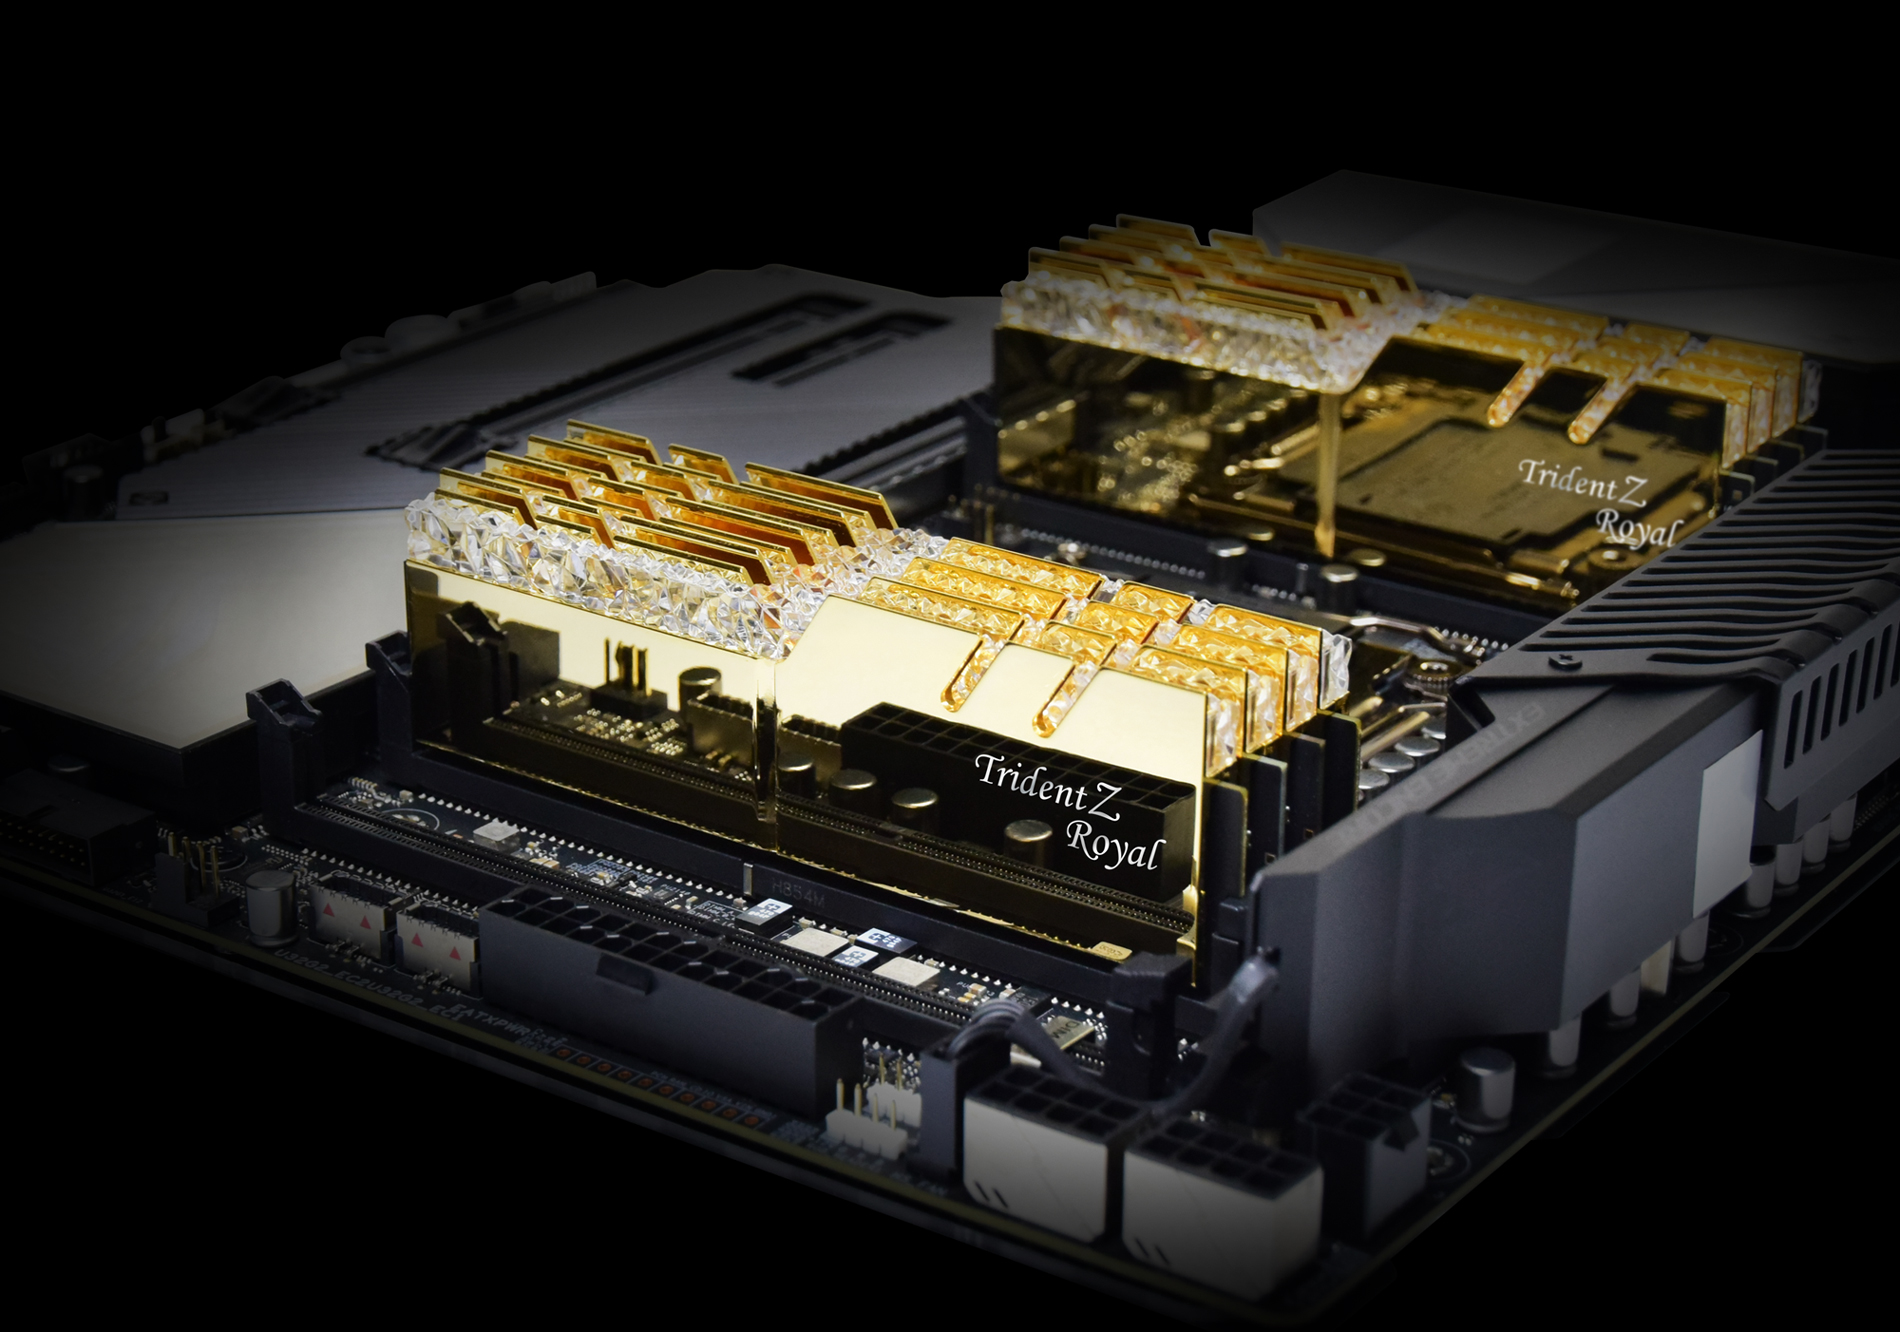 royal gold G.SKILL เปิดตัวแรมรุ่นใหม่ล่าสุด G.SKILL Trident Z Royal DDR4 4300 CL19 และ DDR4 4000 CL16 64GB (8GBx8) แบบ Quad Channel สองรุ่น Royal Gold และ Royal Silver ที่ใช้งานกับแพลตฟอร์ม Intel X299 